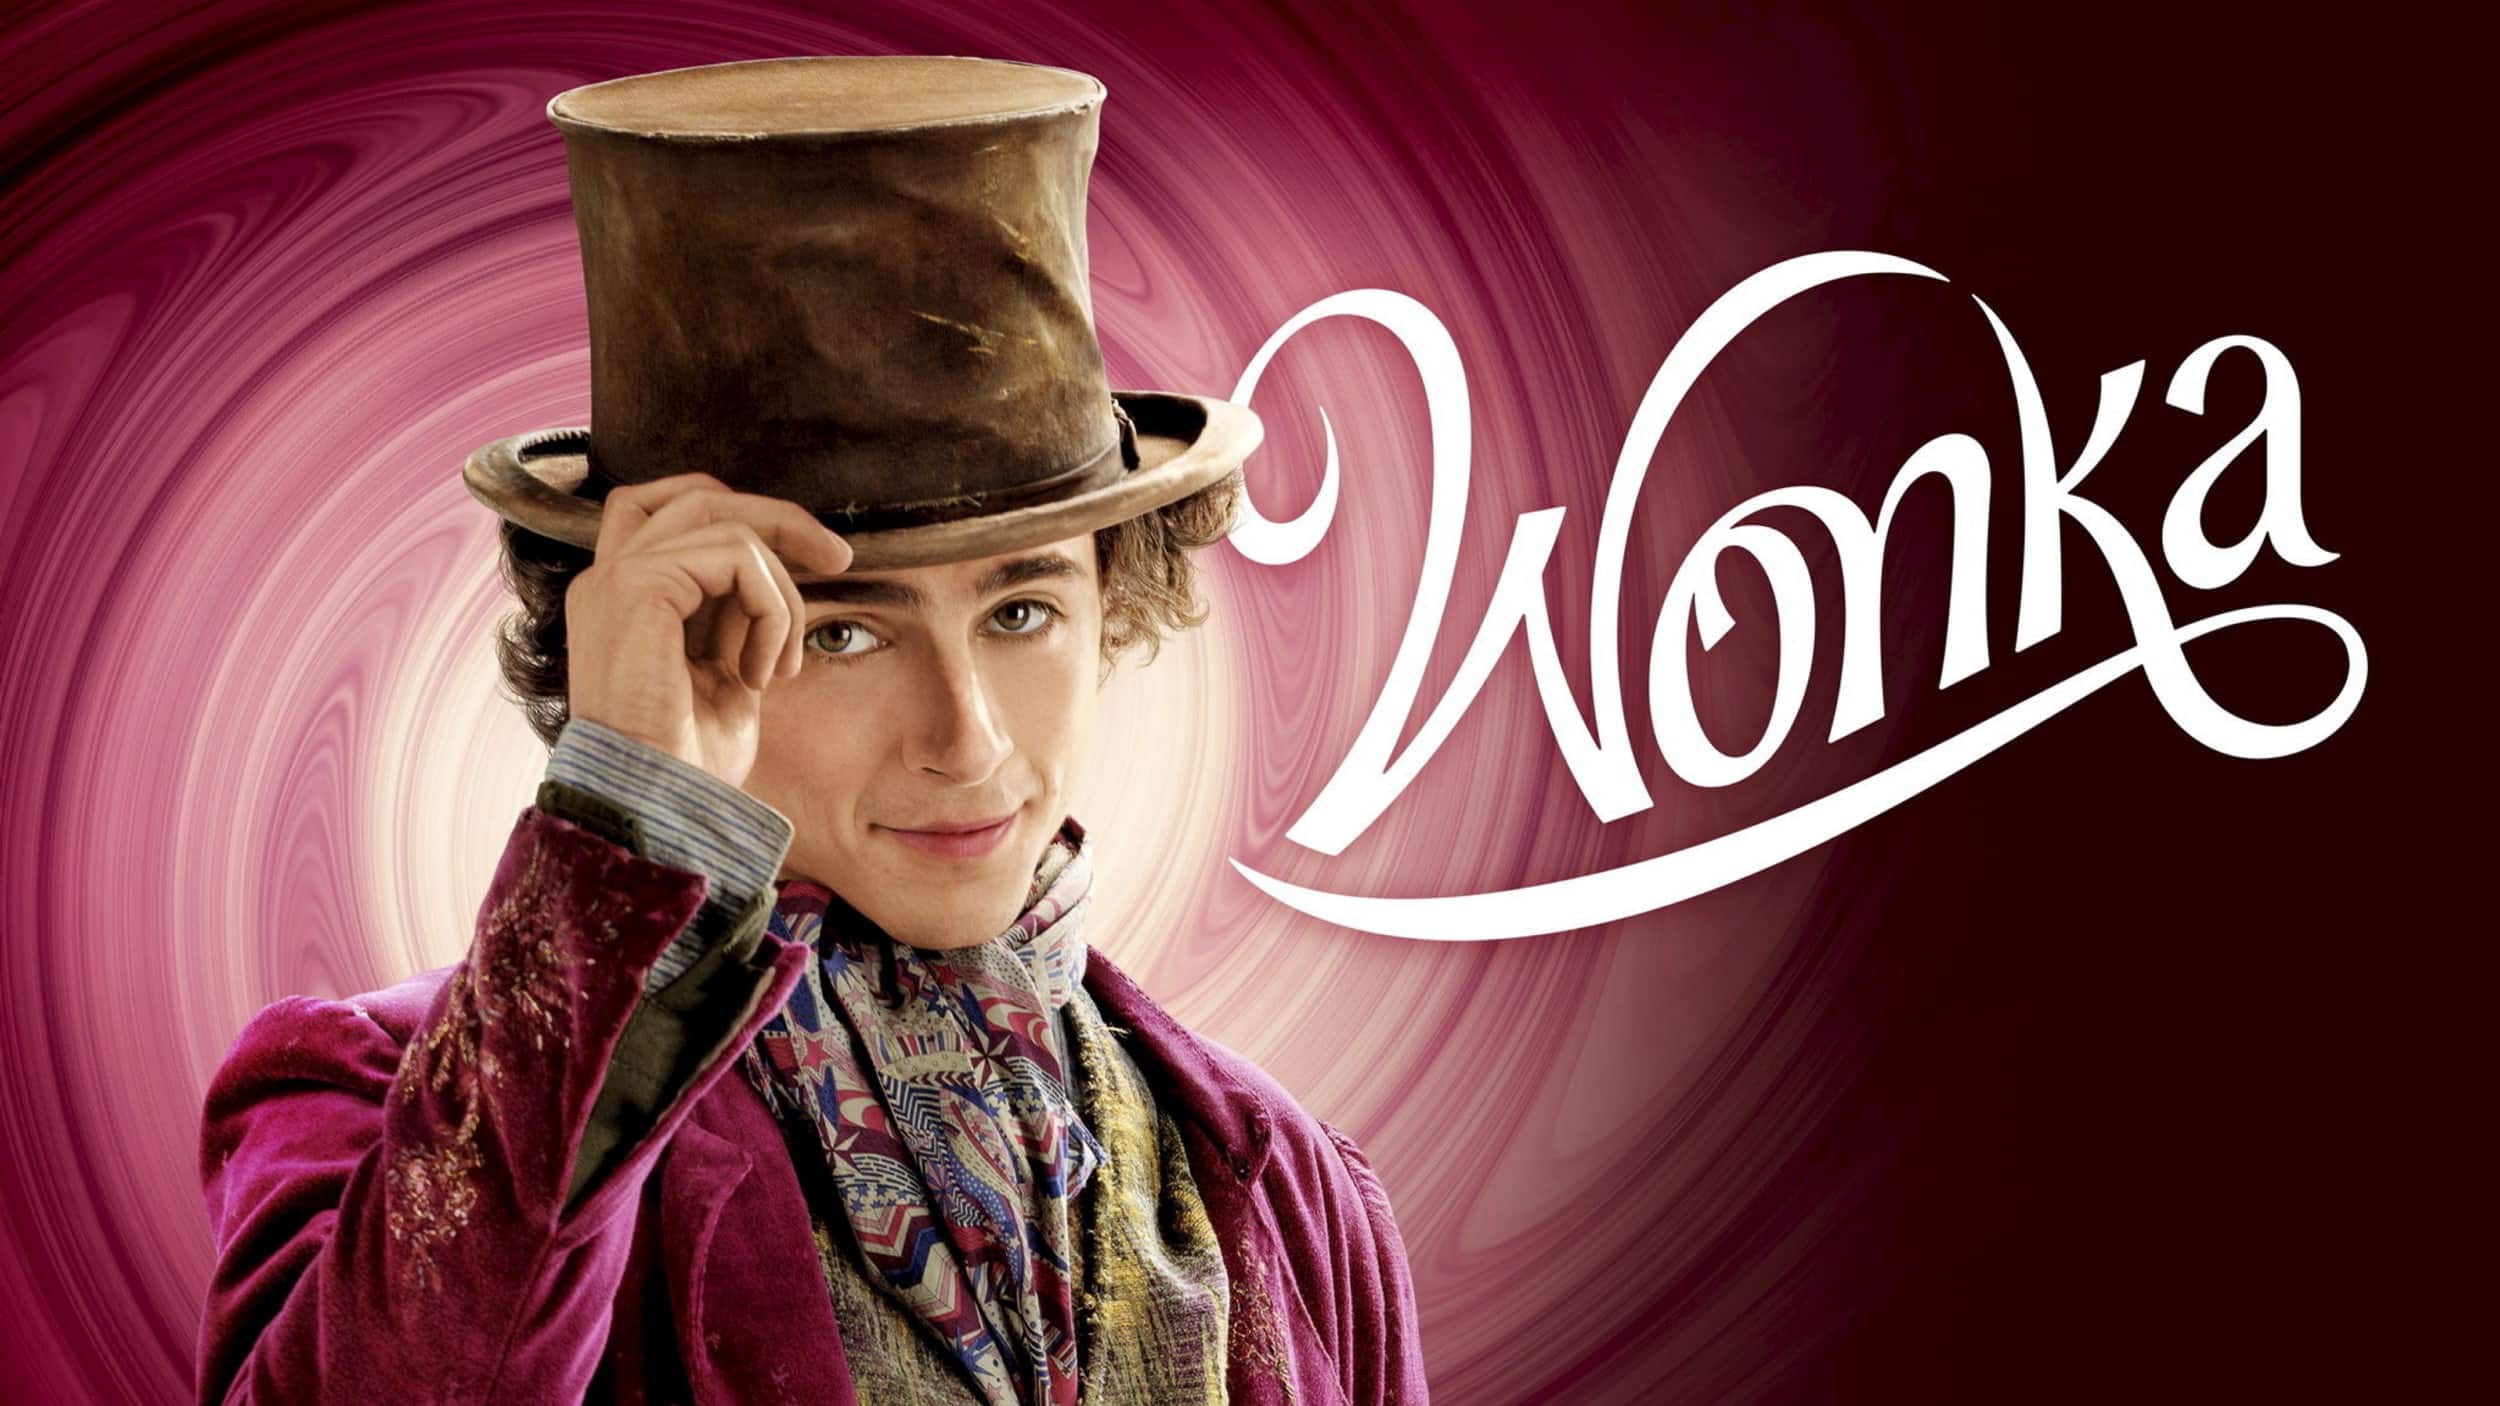 Der Kinohit "Wonka" bereits ab 24. Mai bei Sky und WOW